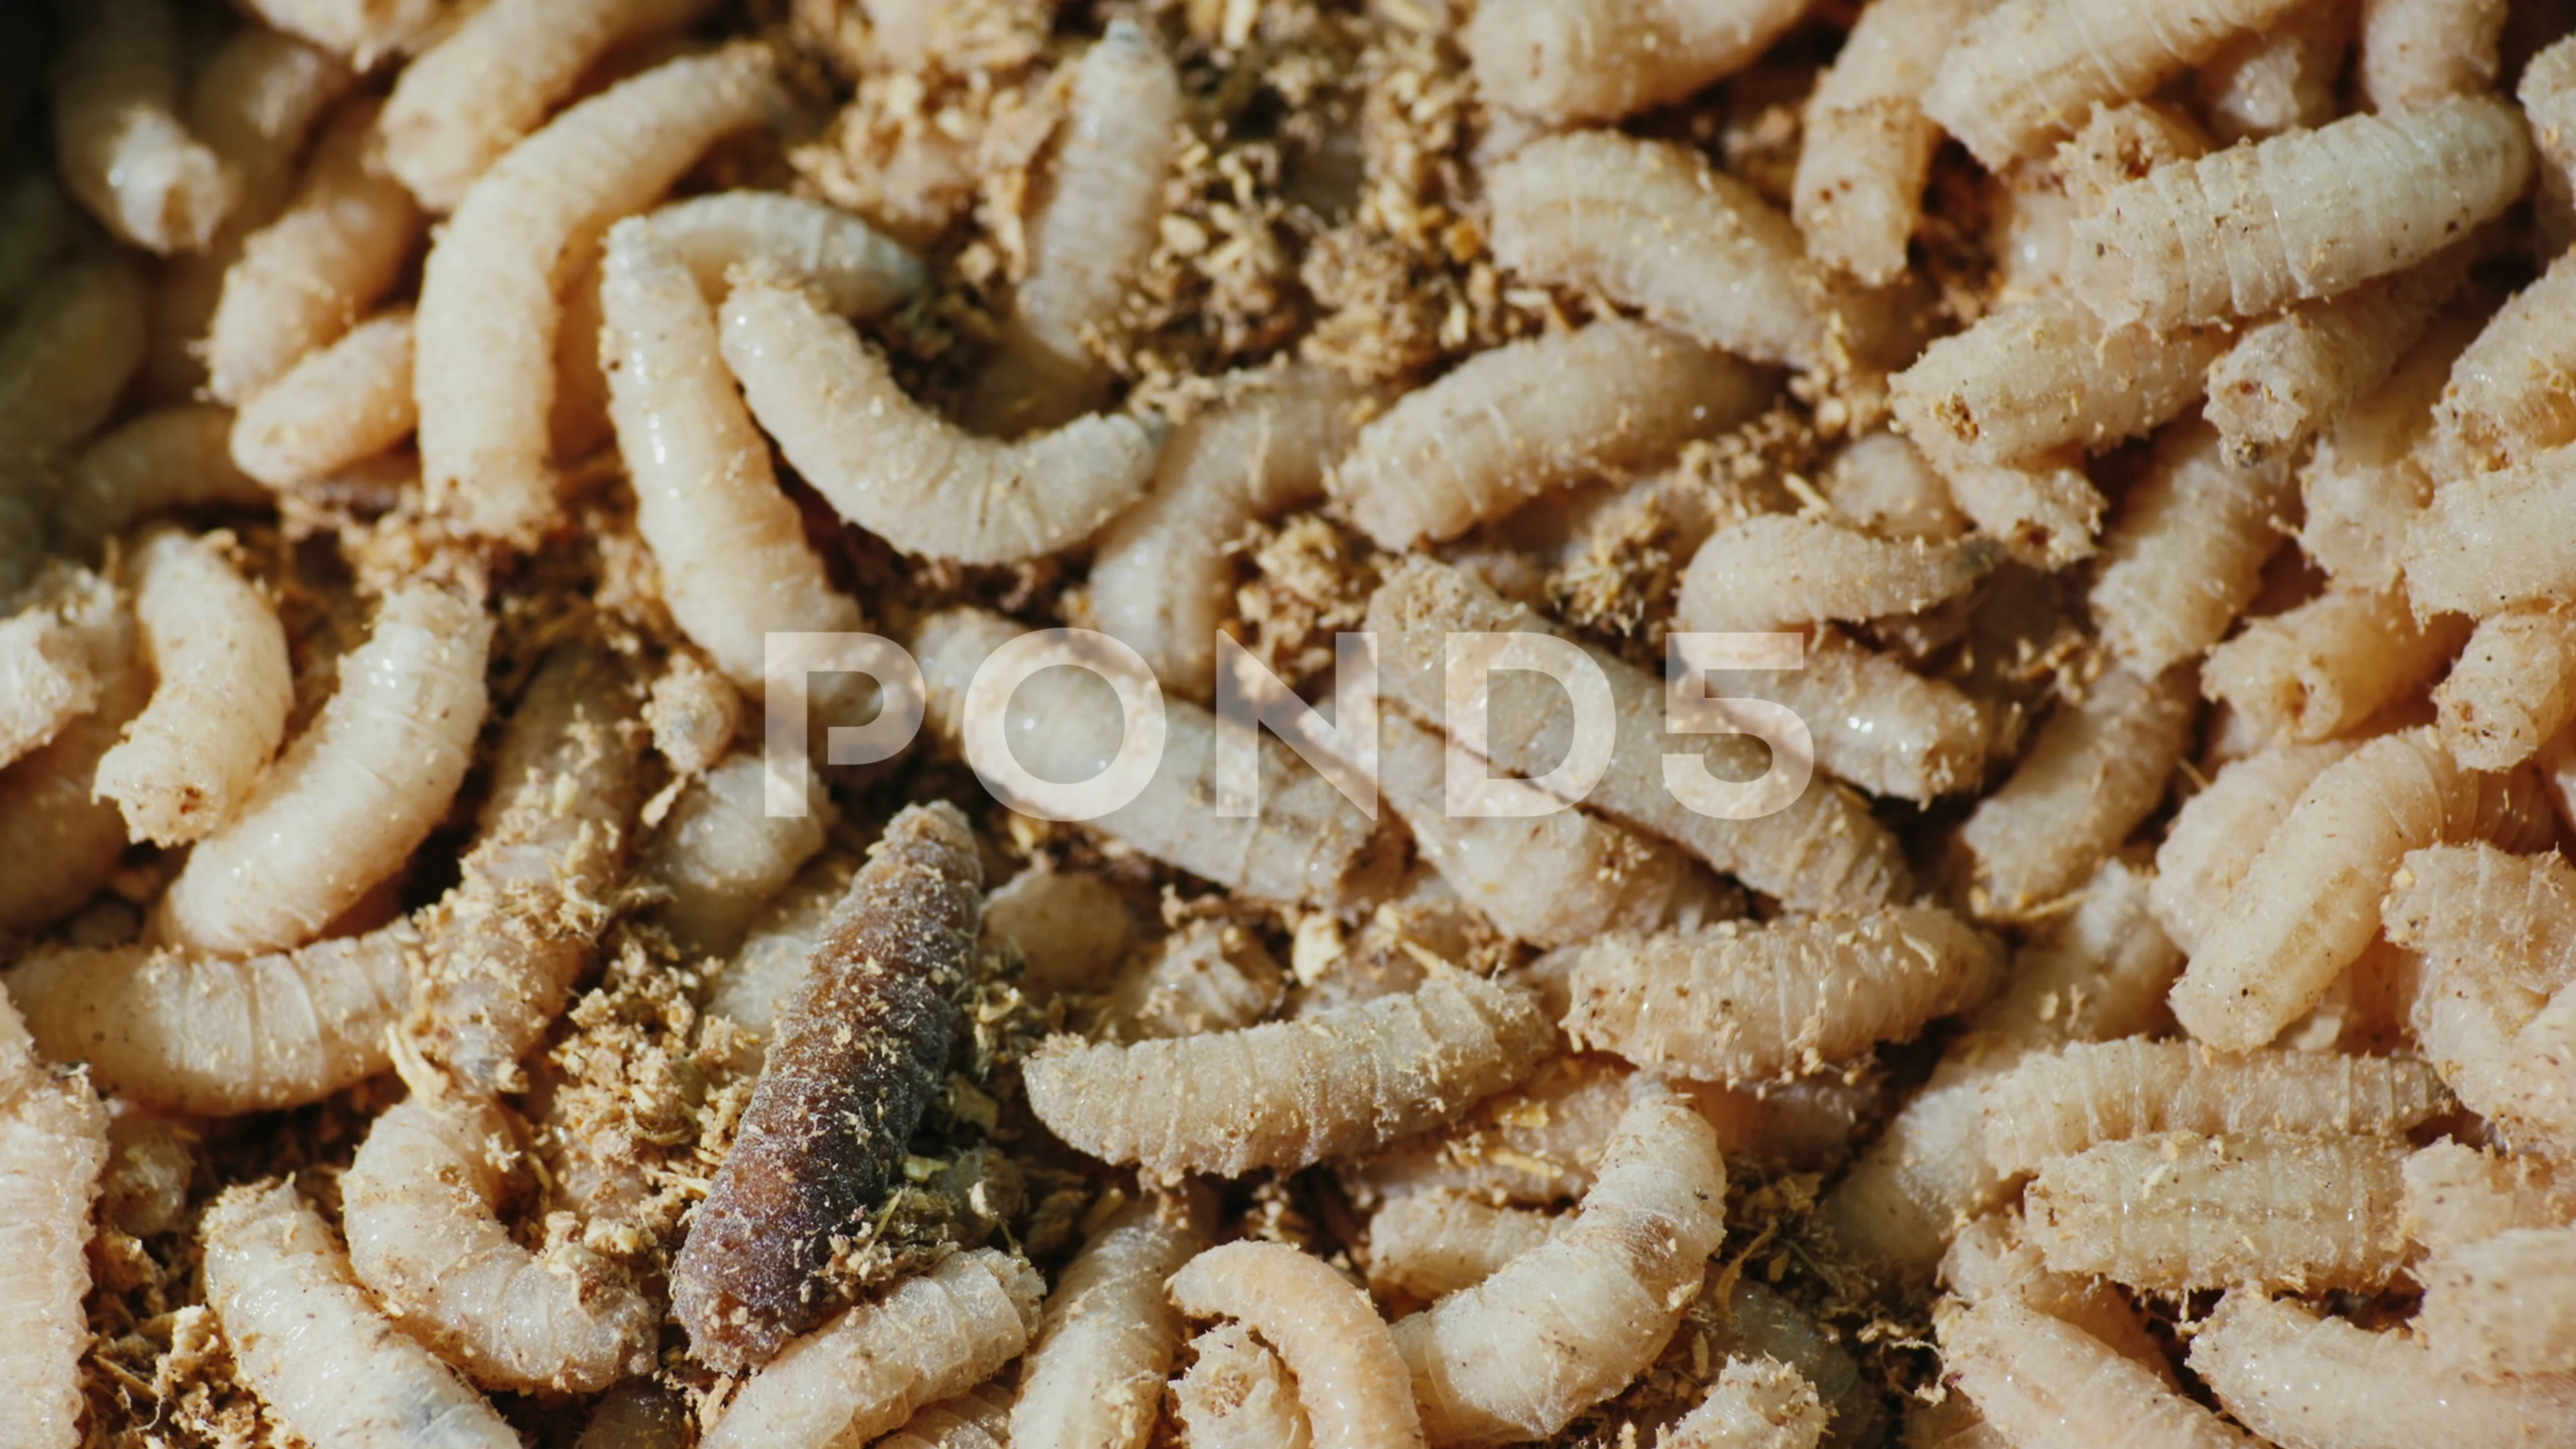 Fishing Bait Red and White Maggots Stock Image - Image of maggot